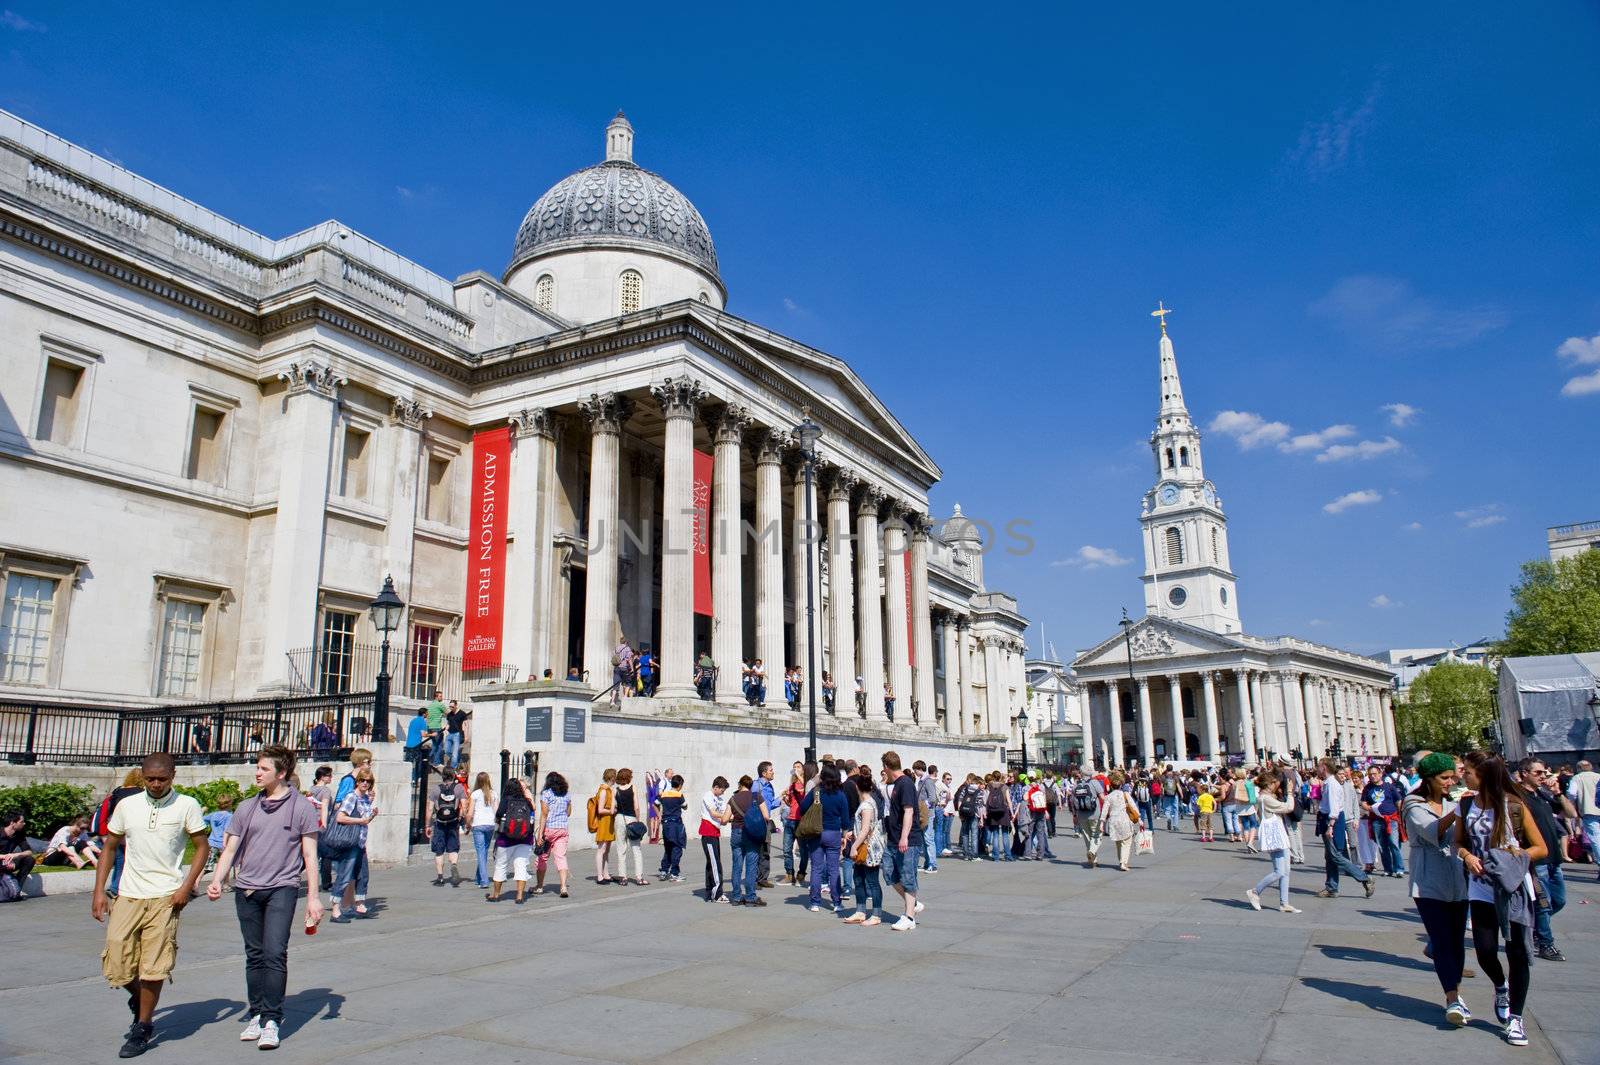 London National Gallery, taken on April 2011